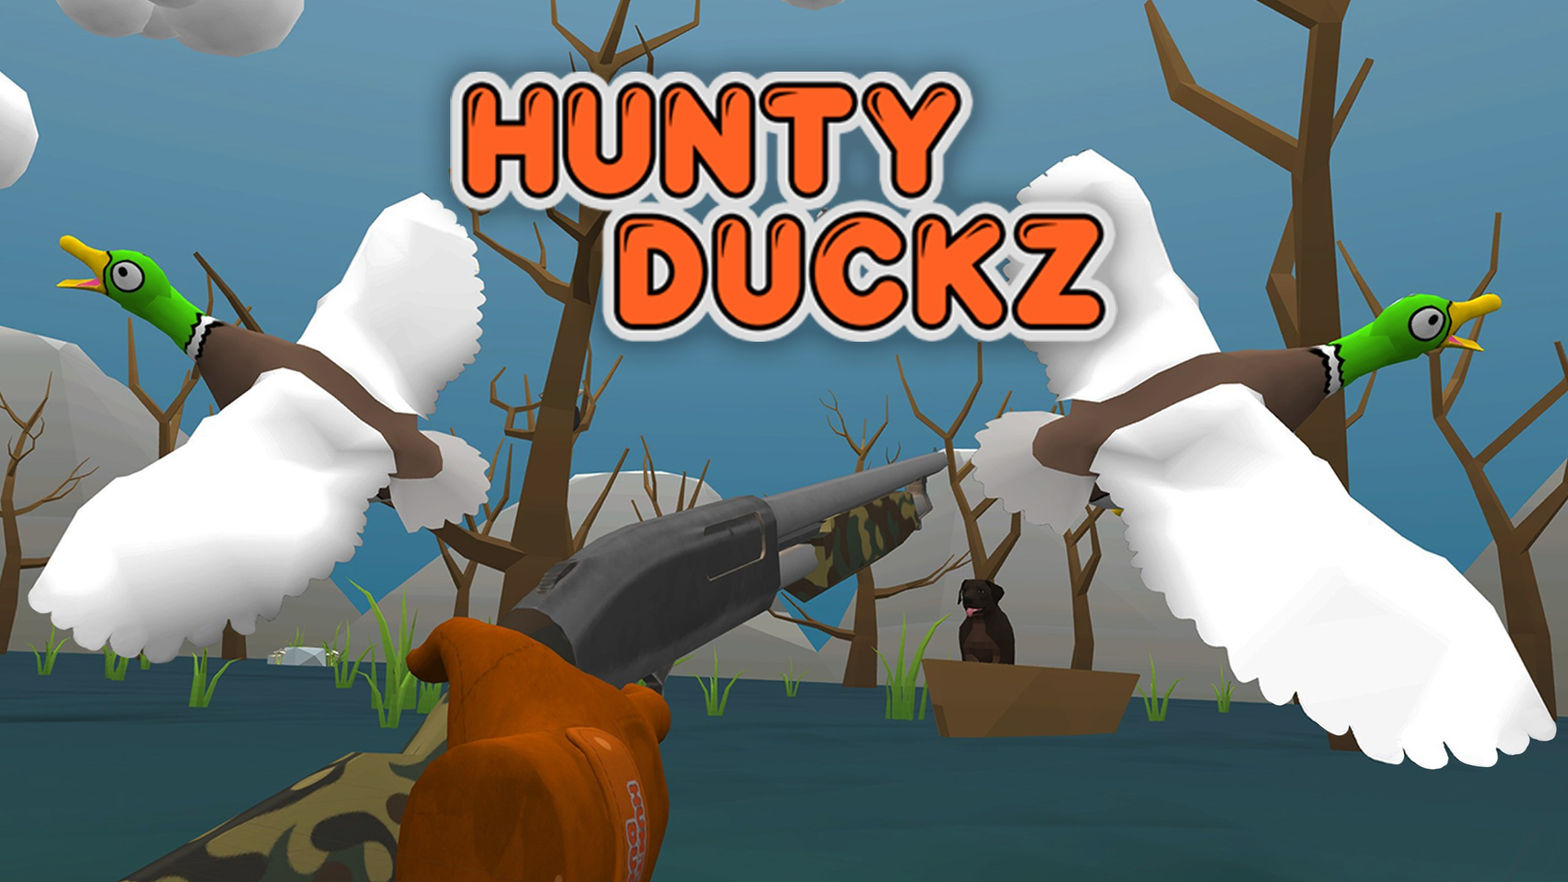 Hunty Duckz